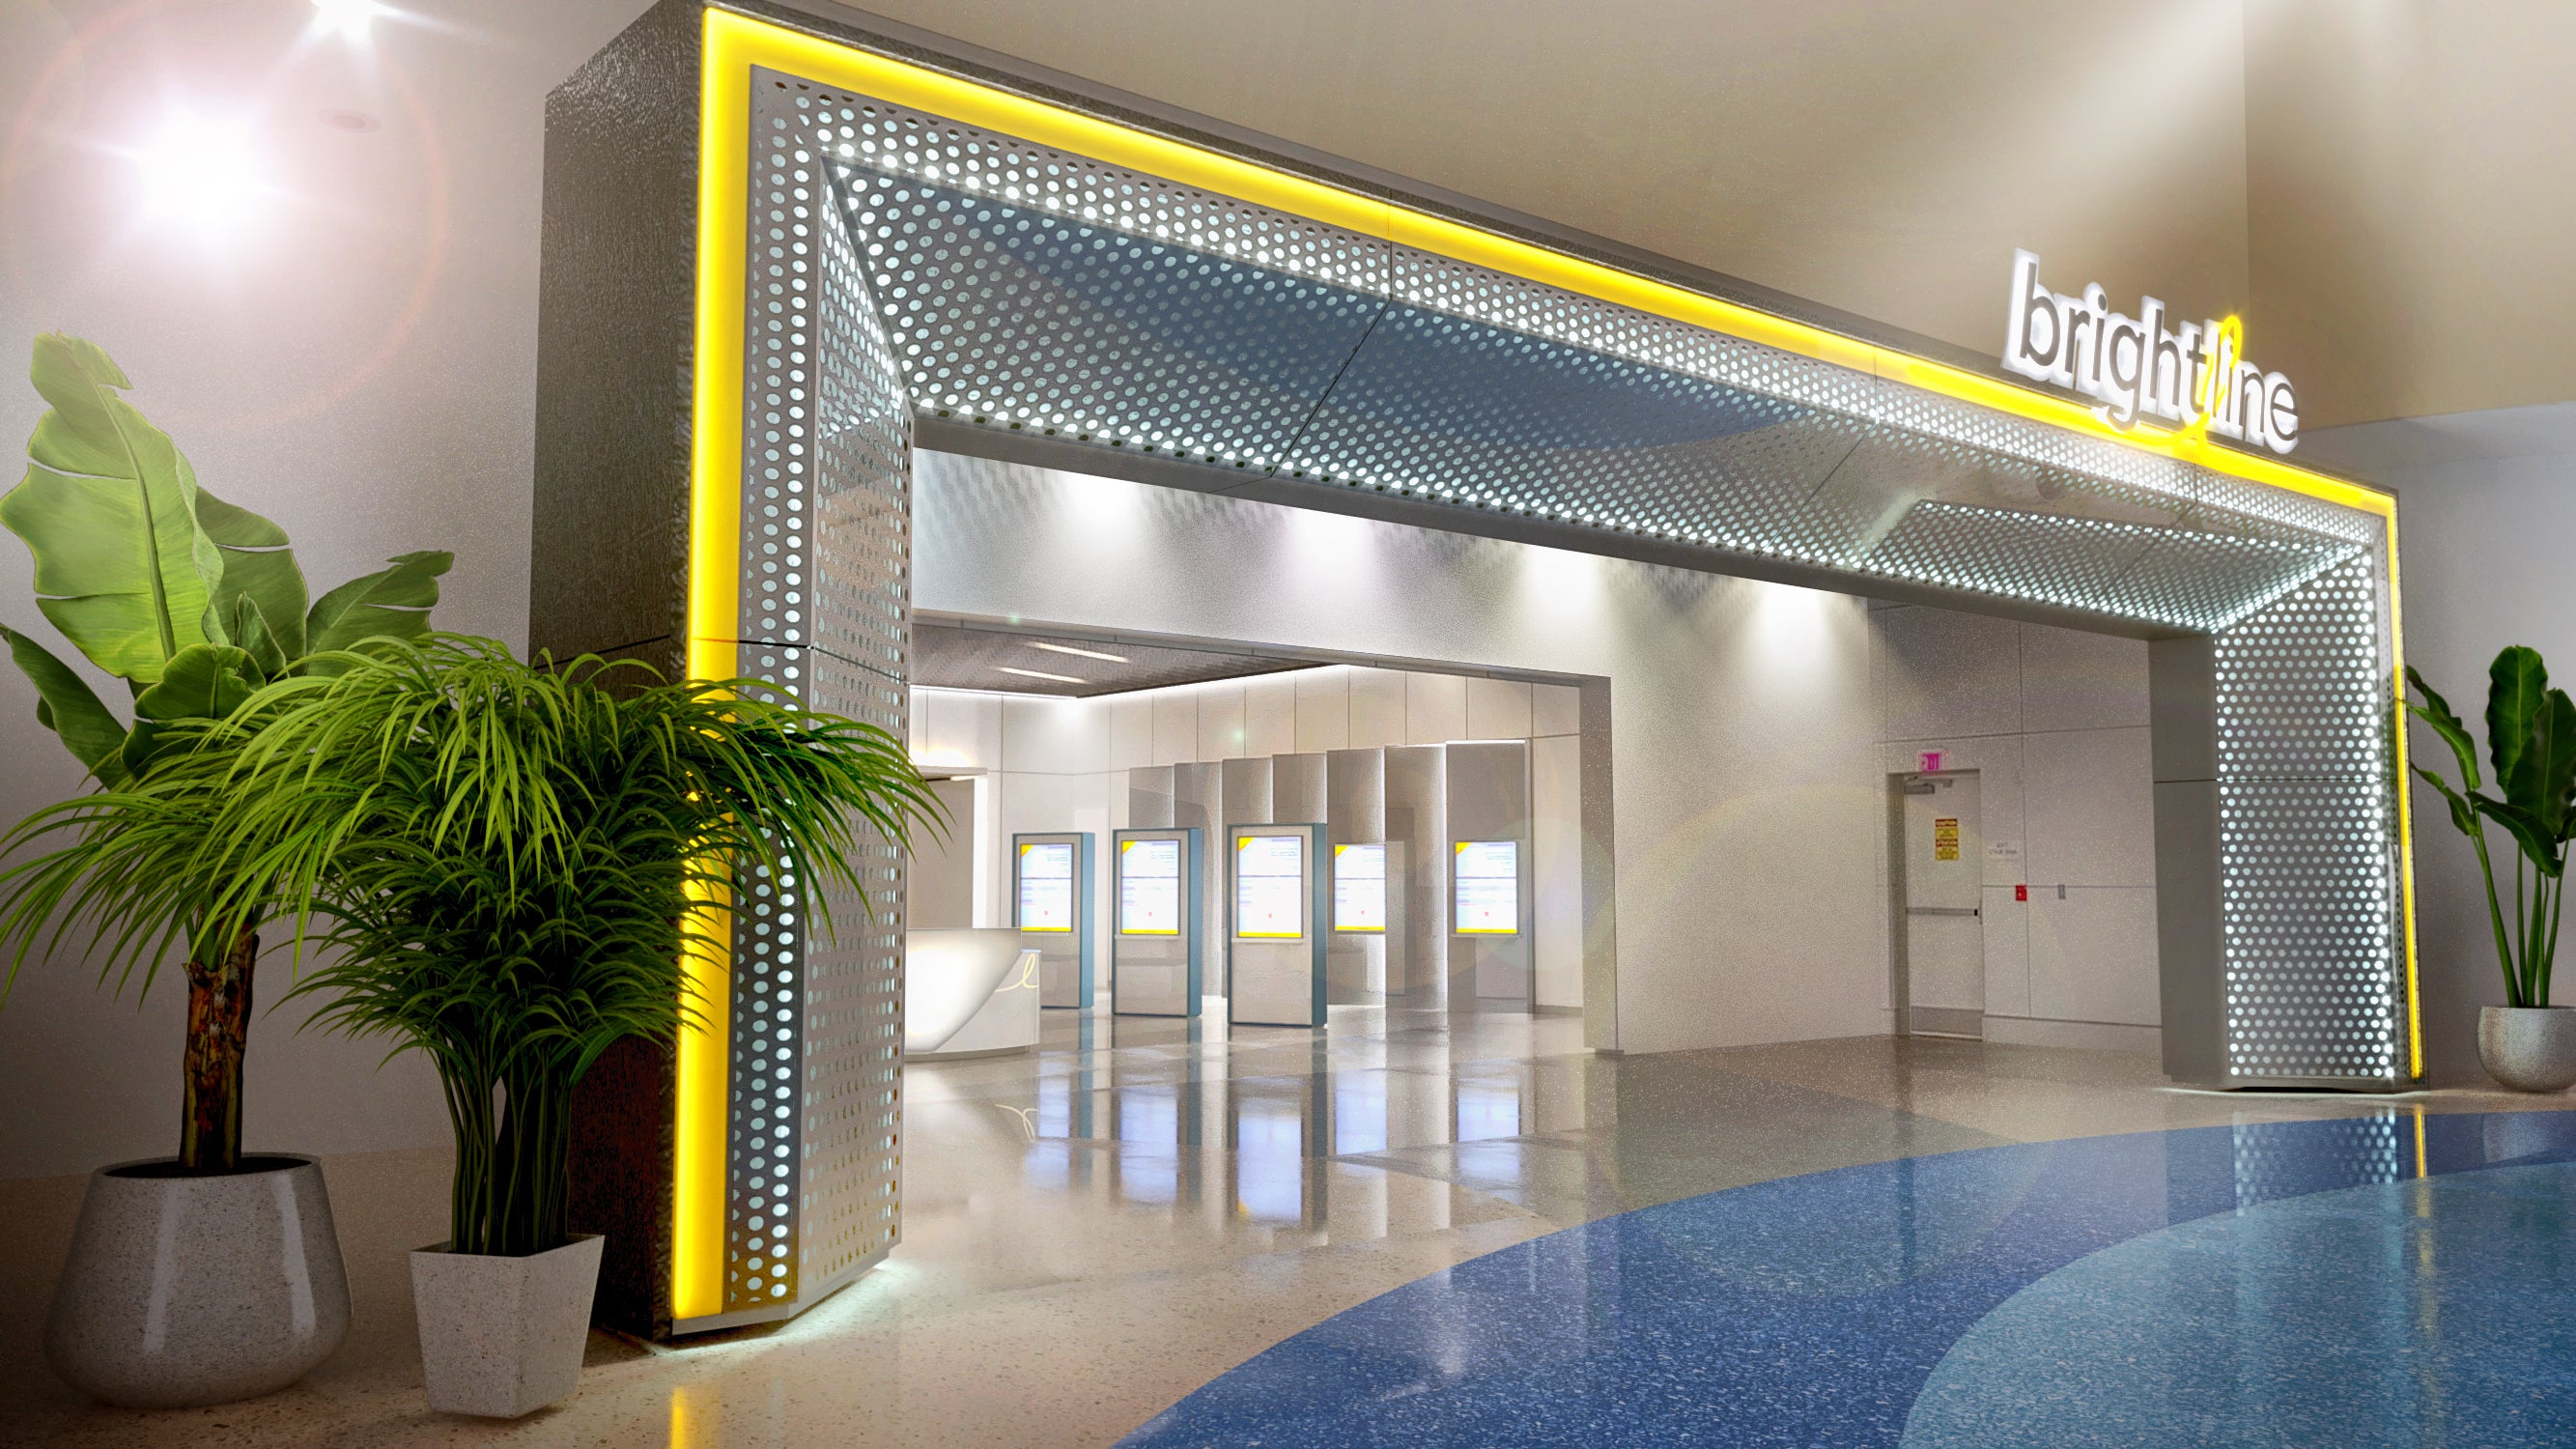 Brightline Orlando Station Entrance